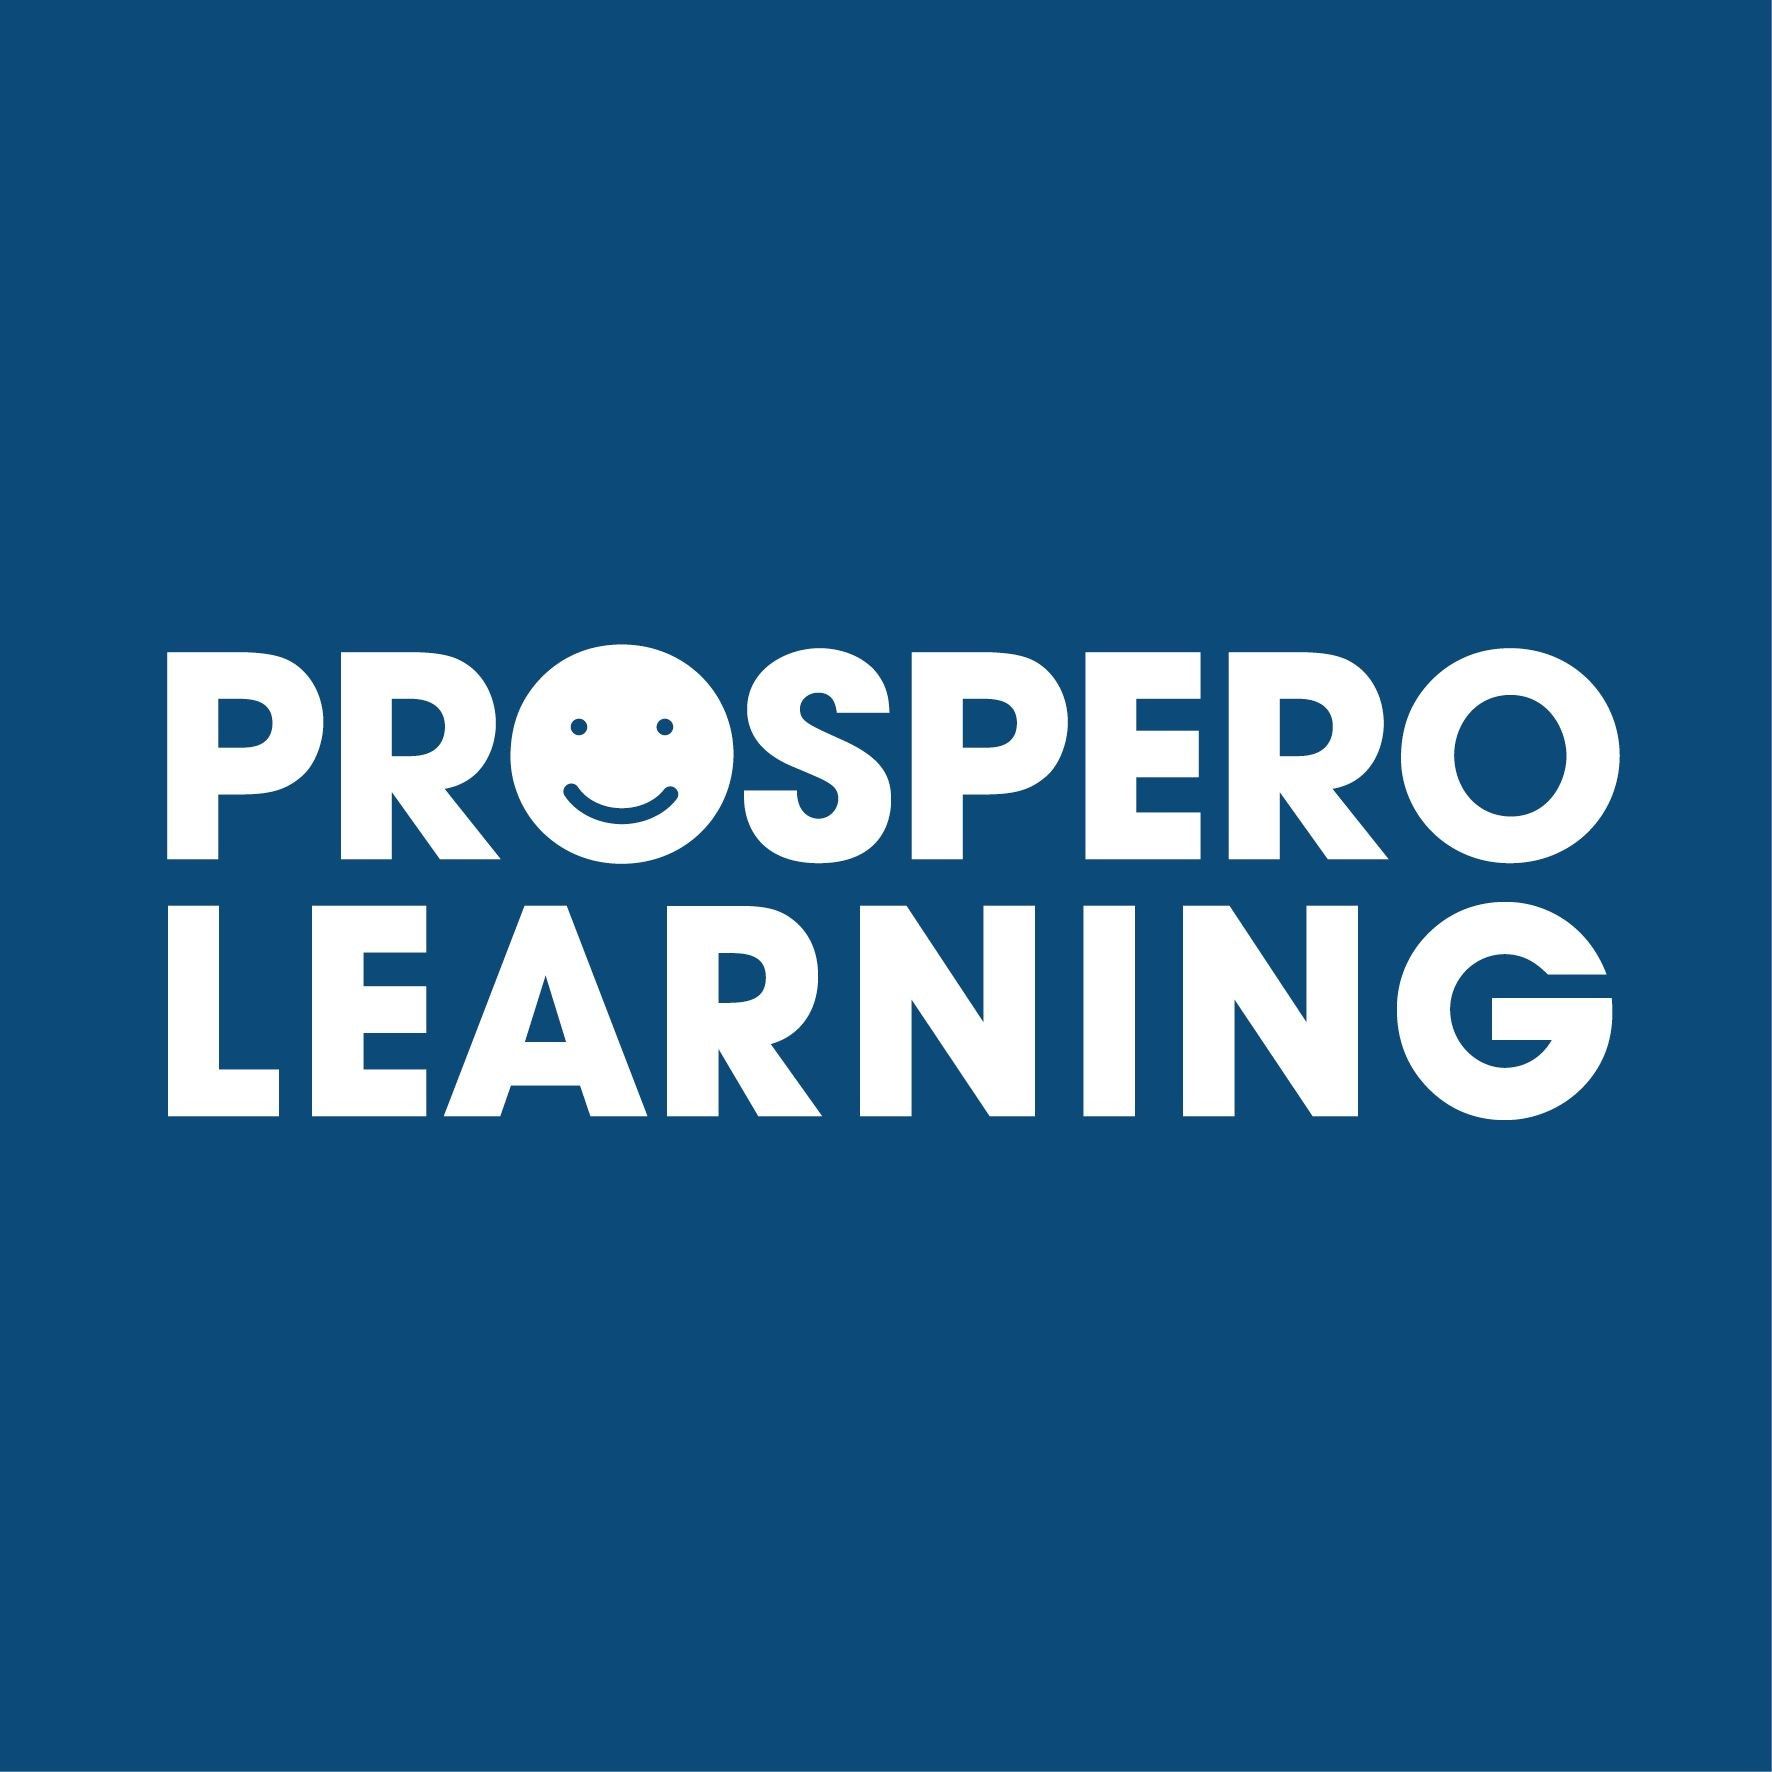 Prospero Learning logo - training courses for educators